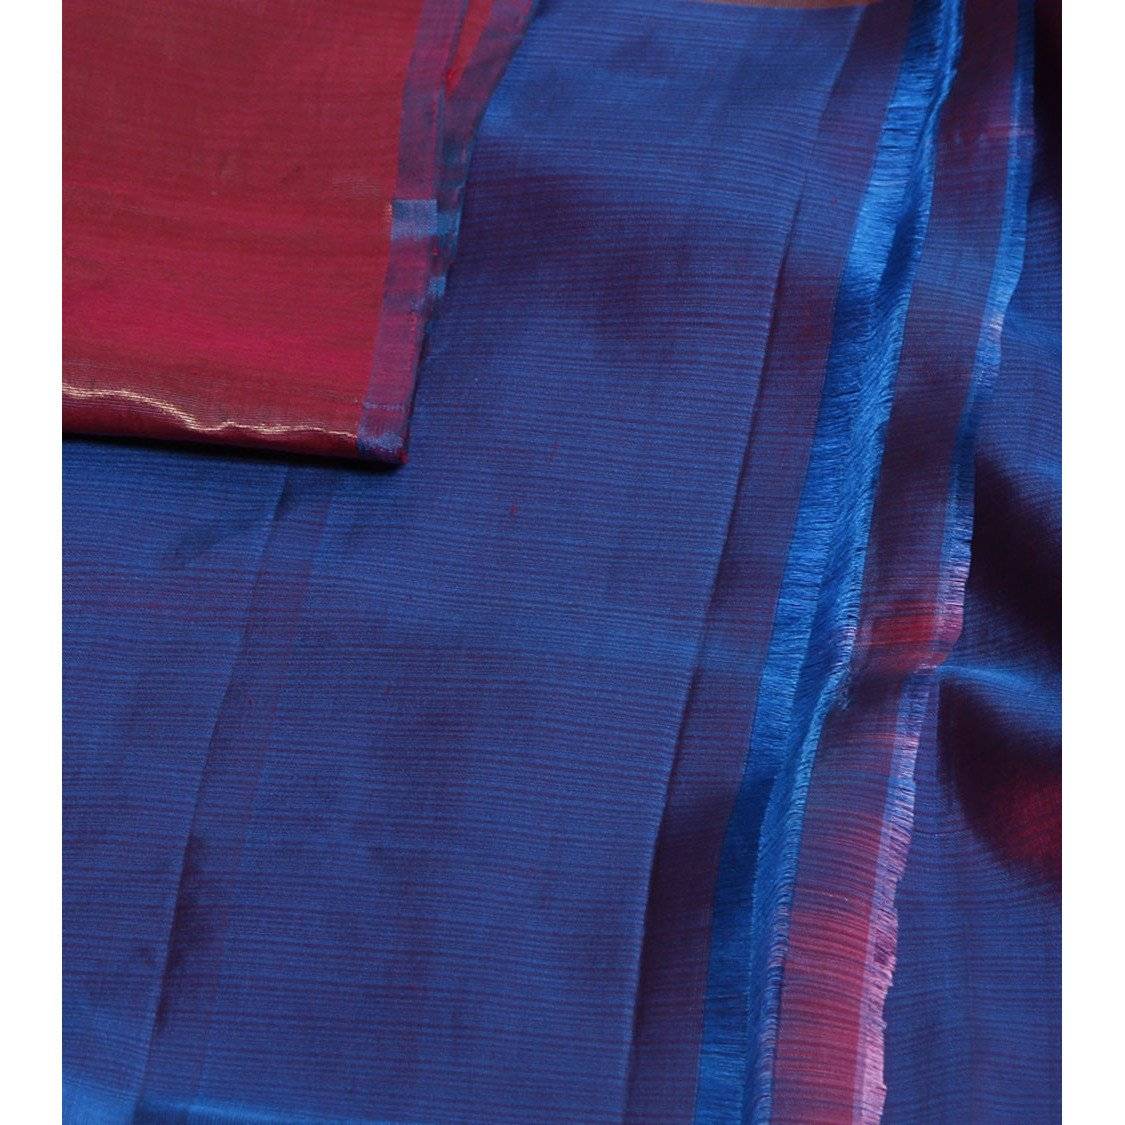 Handwoven Pink and Blue Silk Saree